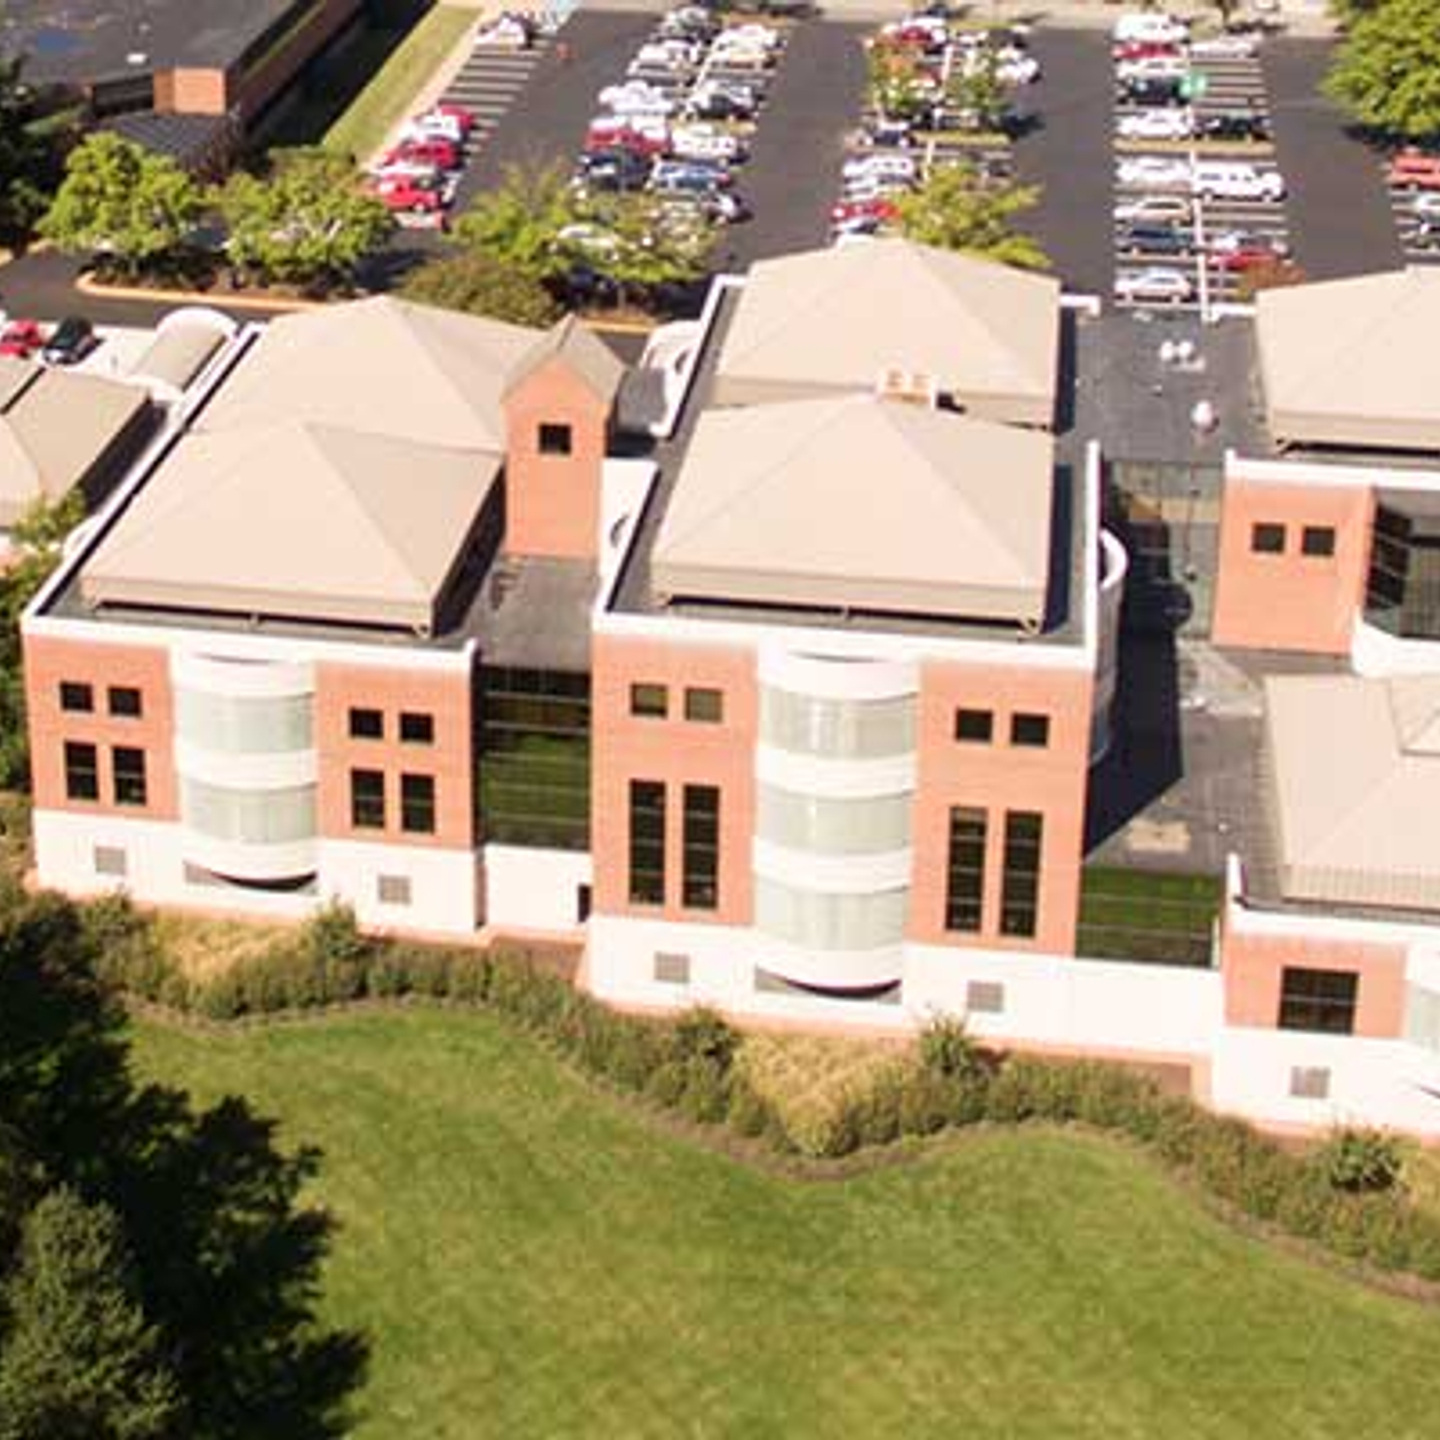 Aerial view of Parham Doctors' Hospital